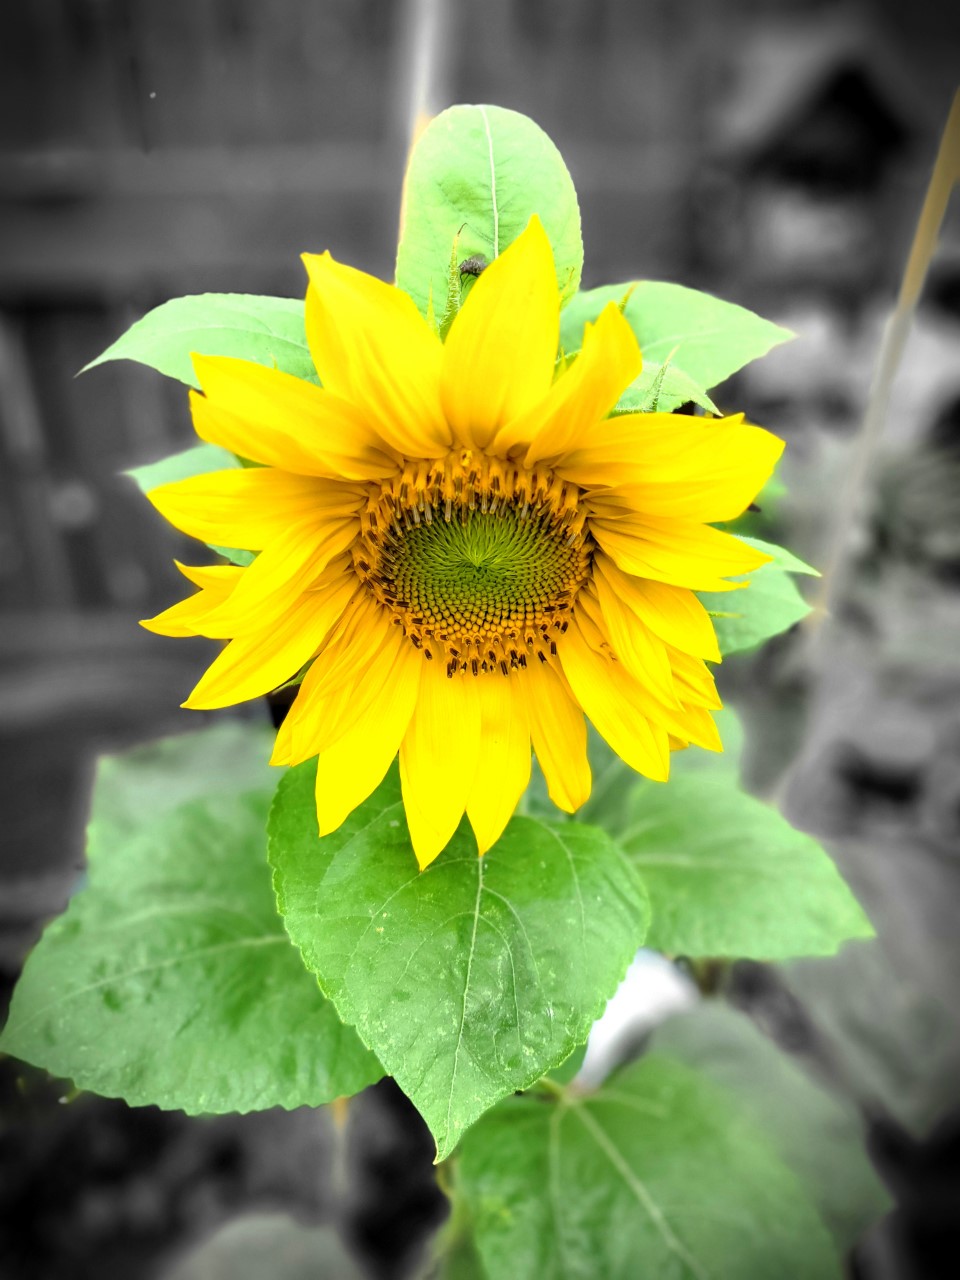 Caroline G - Please see my beautiful sunflowers